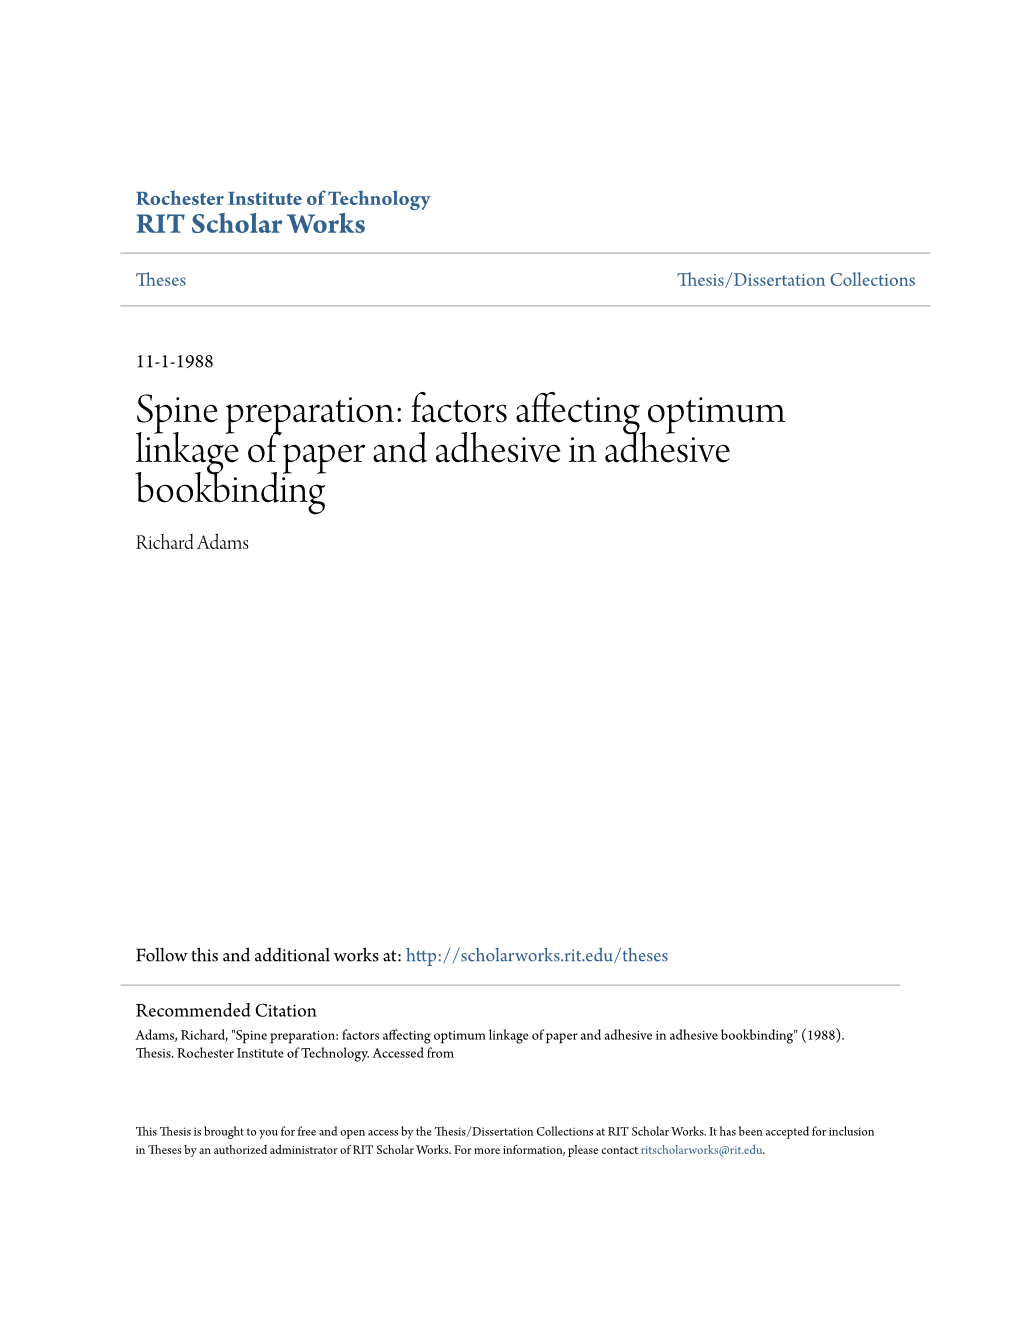 Spine Preparation: Factors Affecting Optimum Linkage of Paper and Adhesive in Adhesive Bookbinding Richard Adams